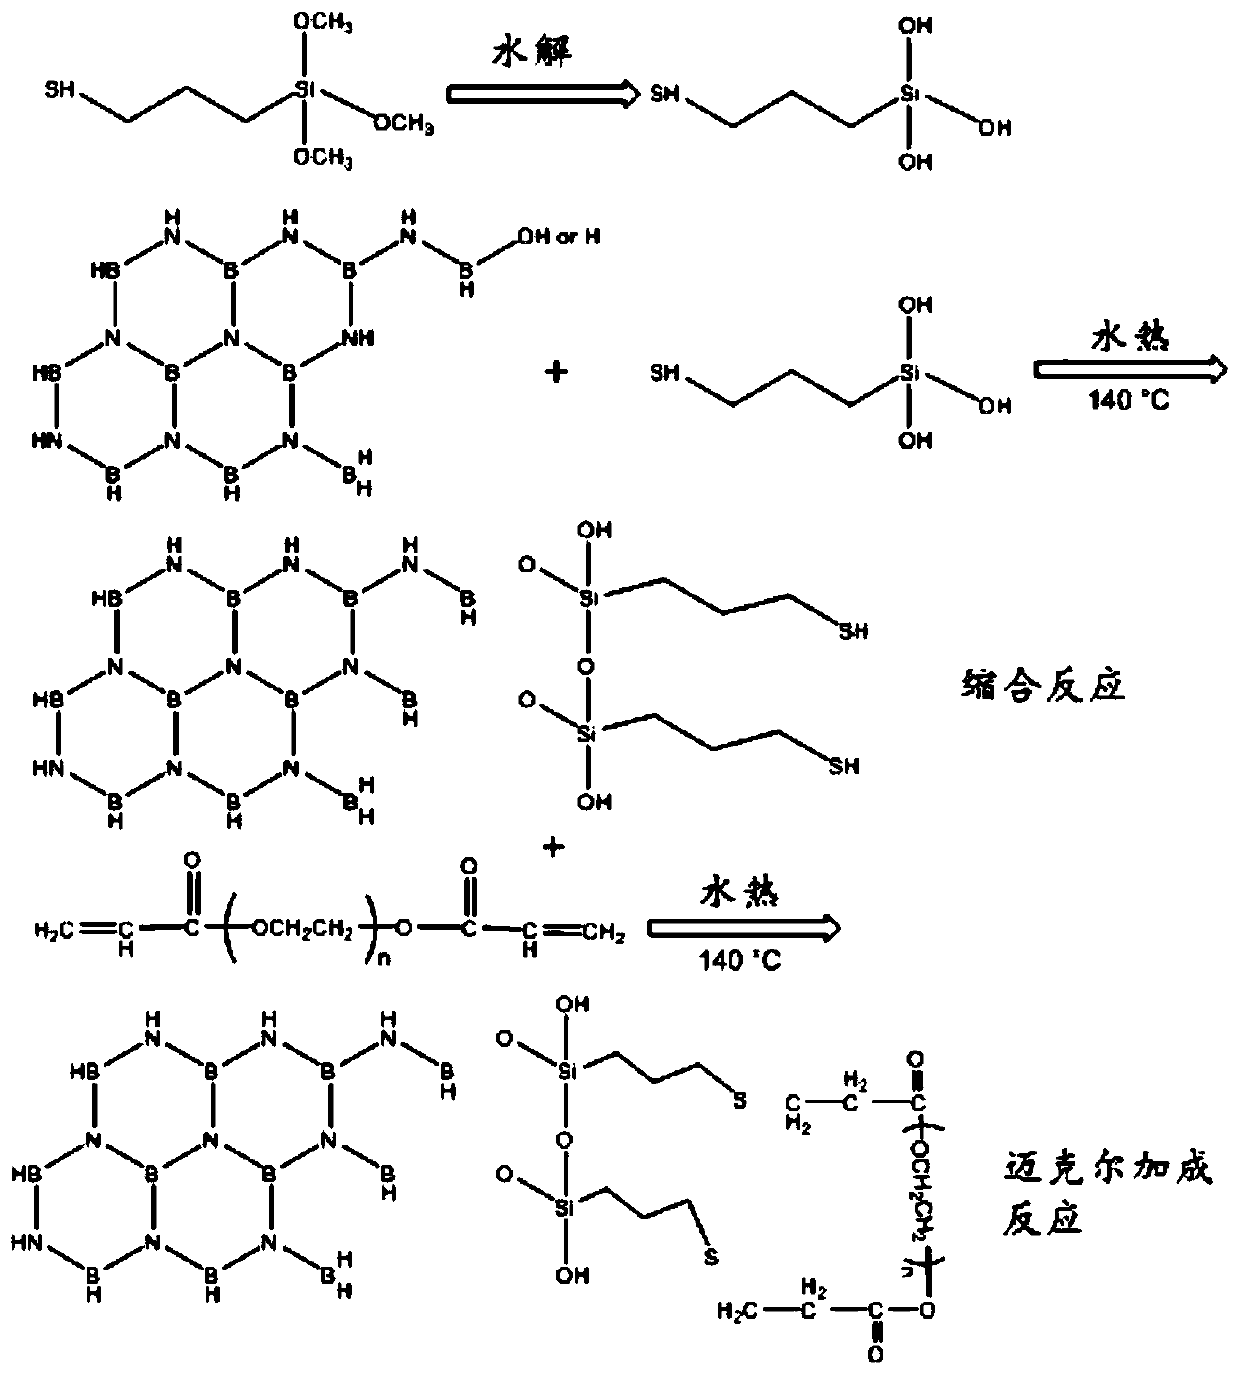 Nano pesticide preparation based on boron nitride nanosheet grafted hydrophilic macromolecules and preparation method thereof